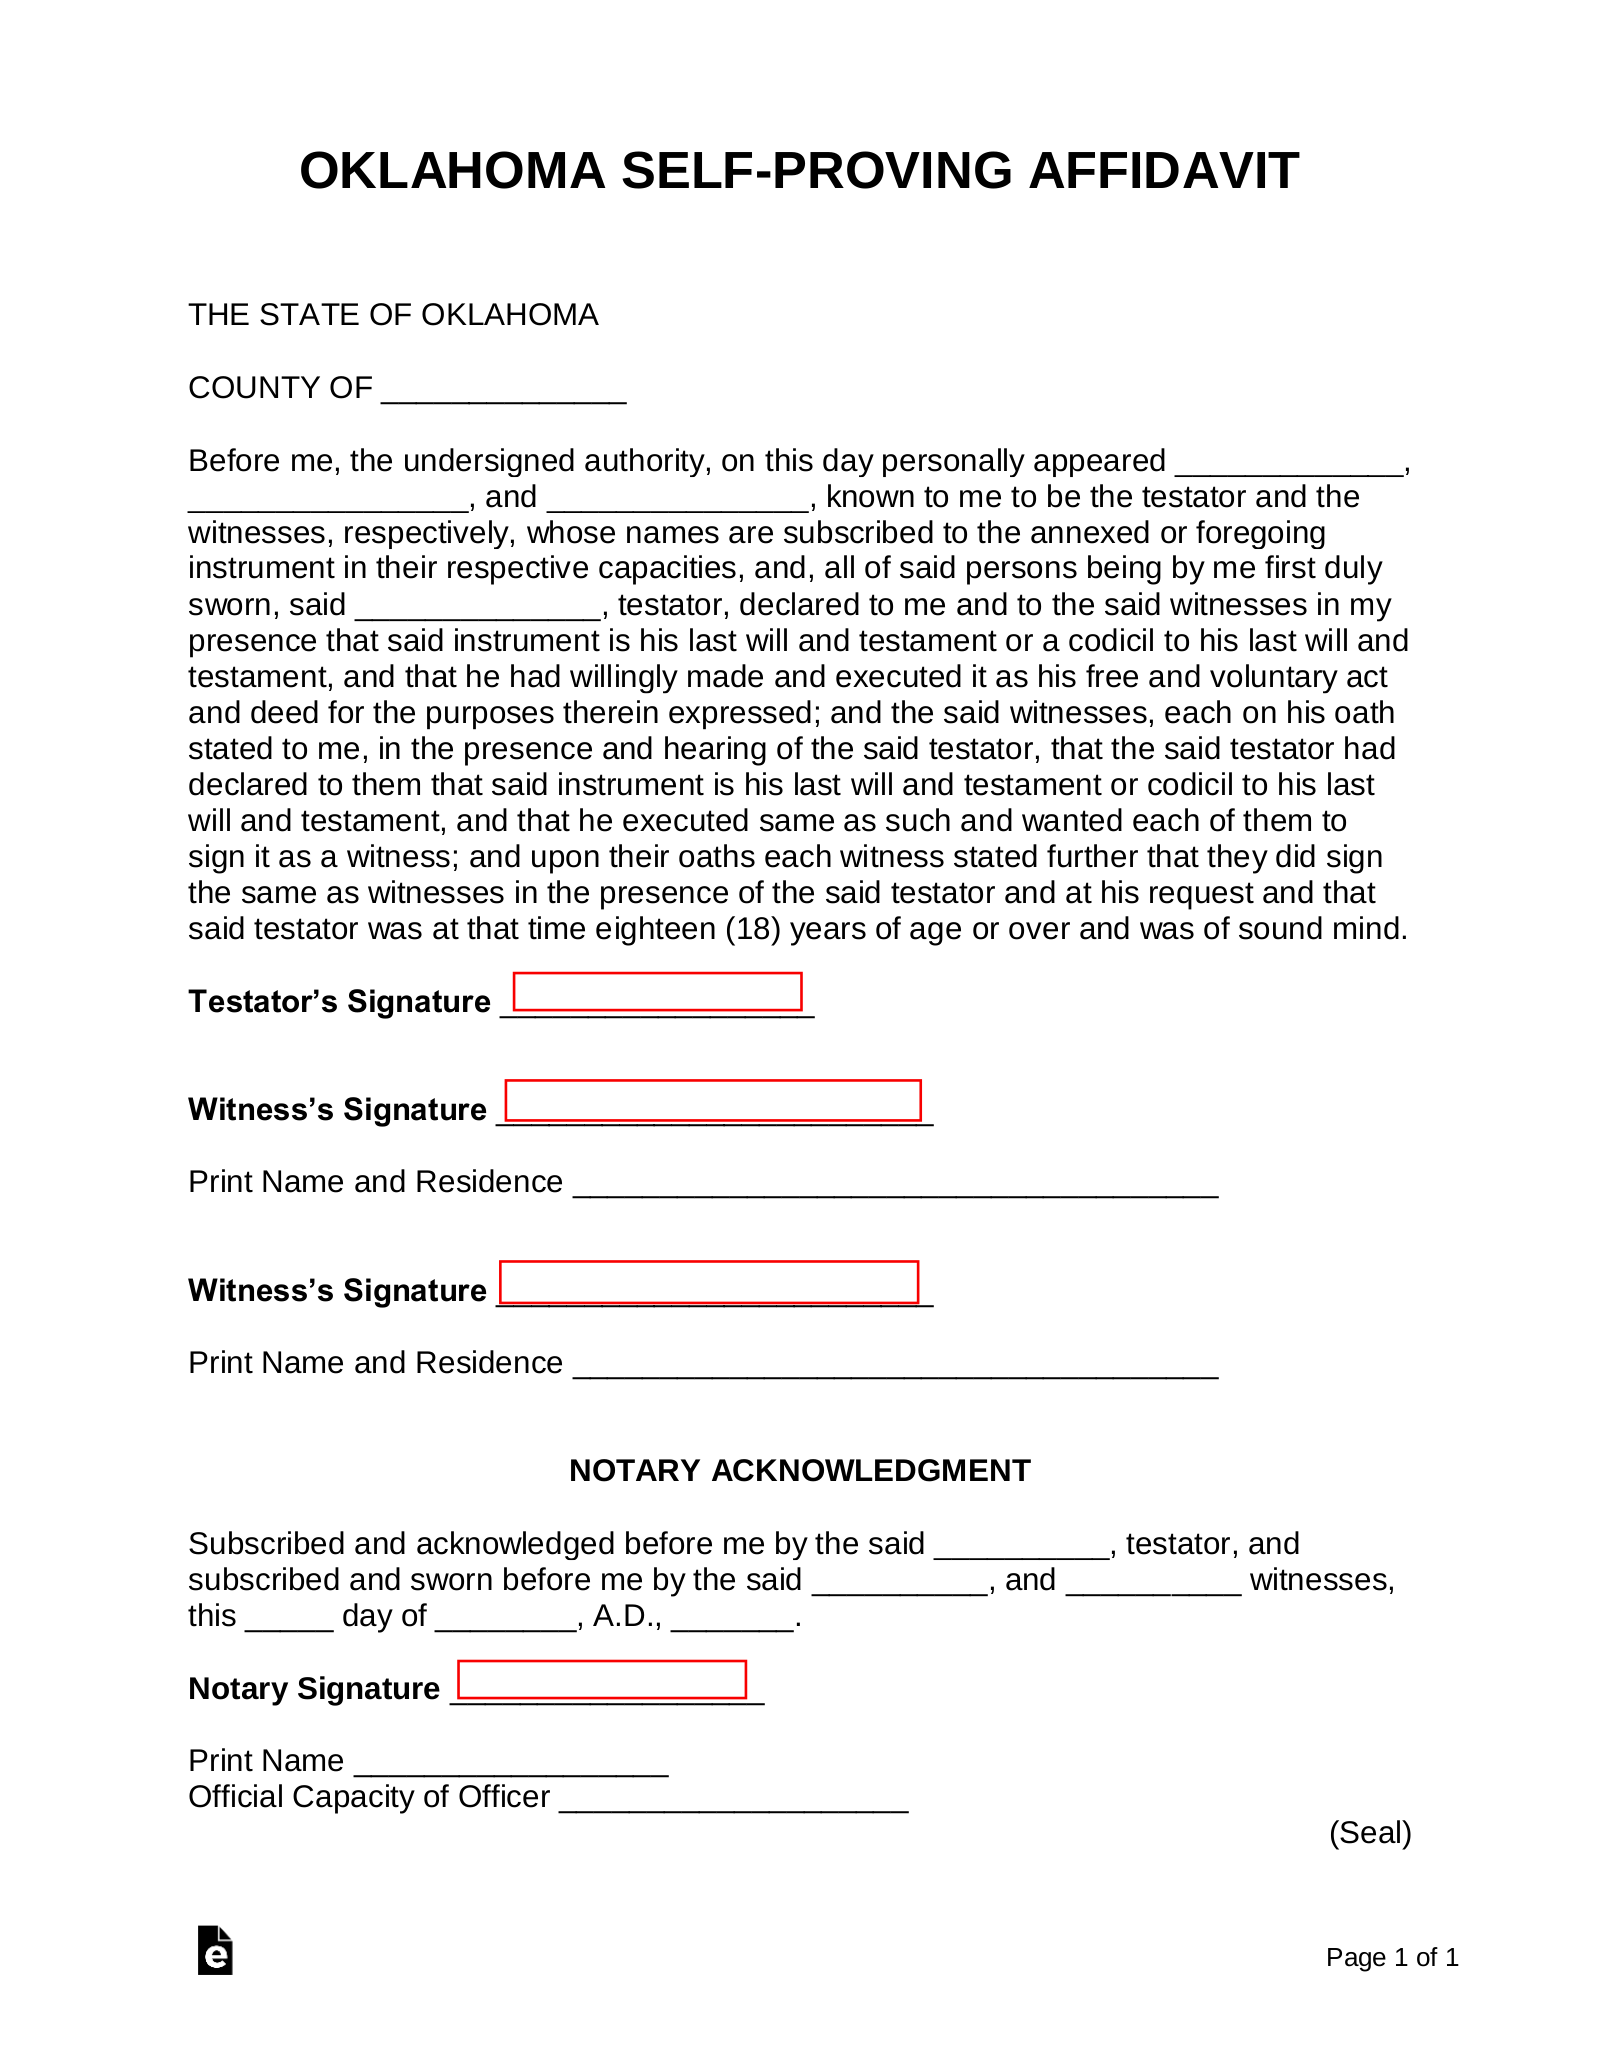 Oklahoma Self-Proving Affidavit Form